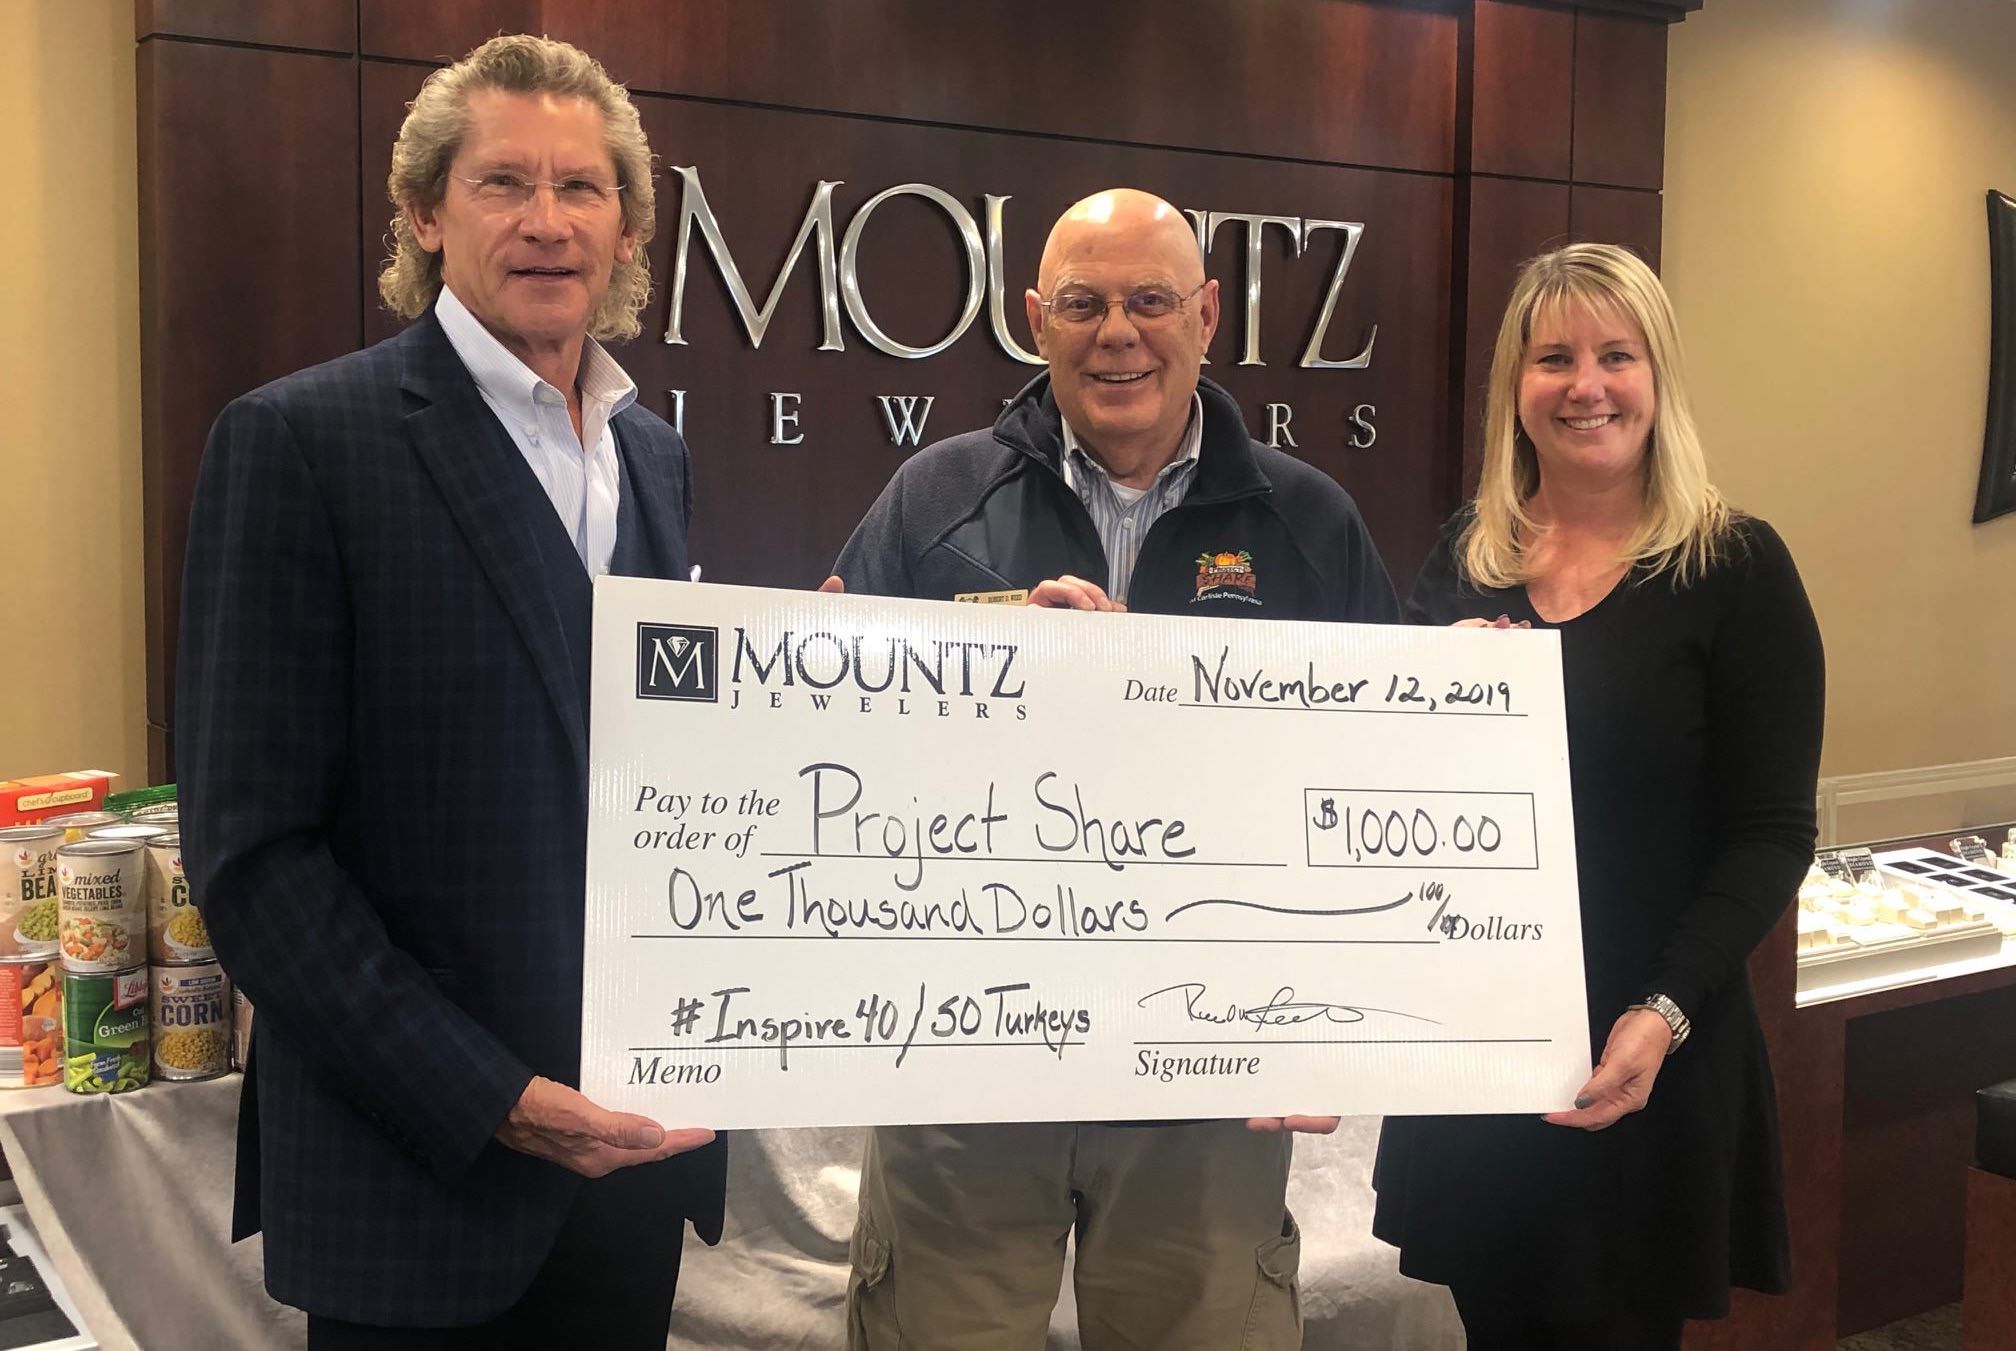 Mountz Jewelers: Recognizing Community as Heroes